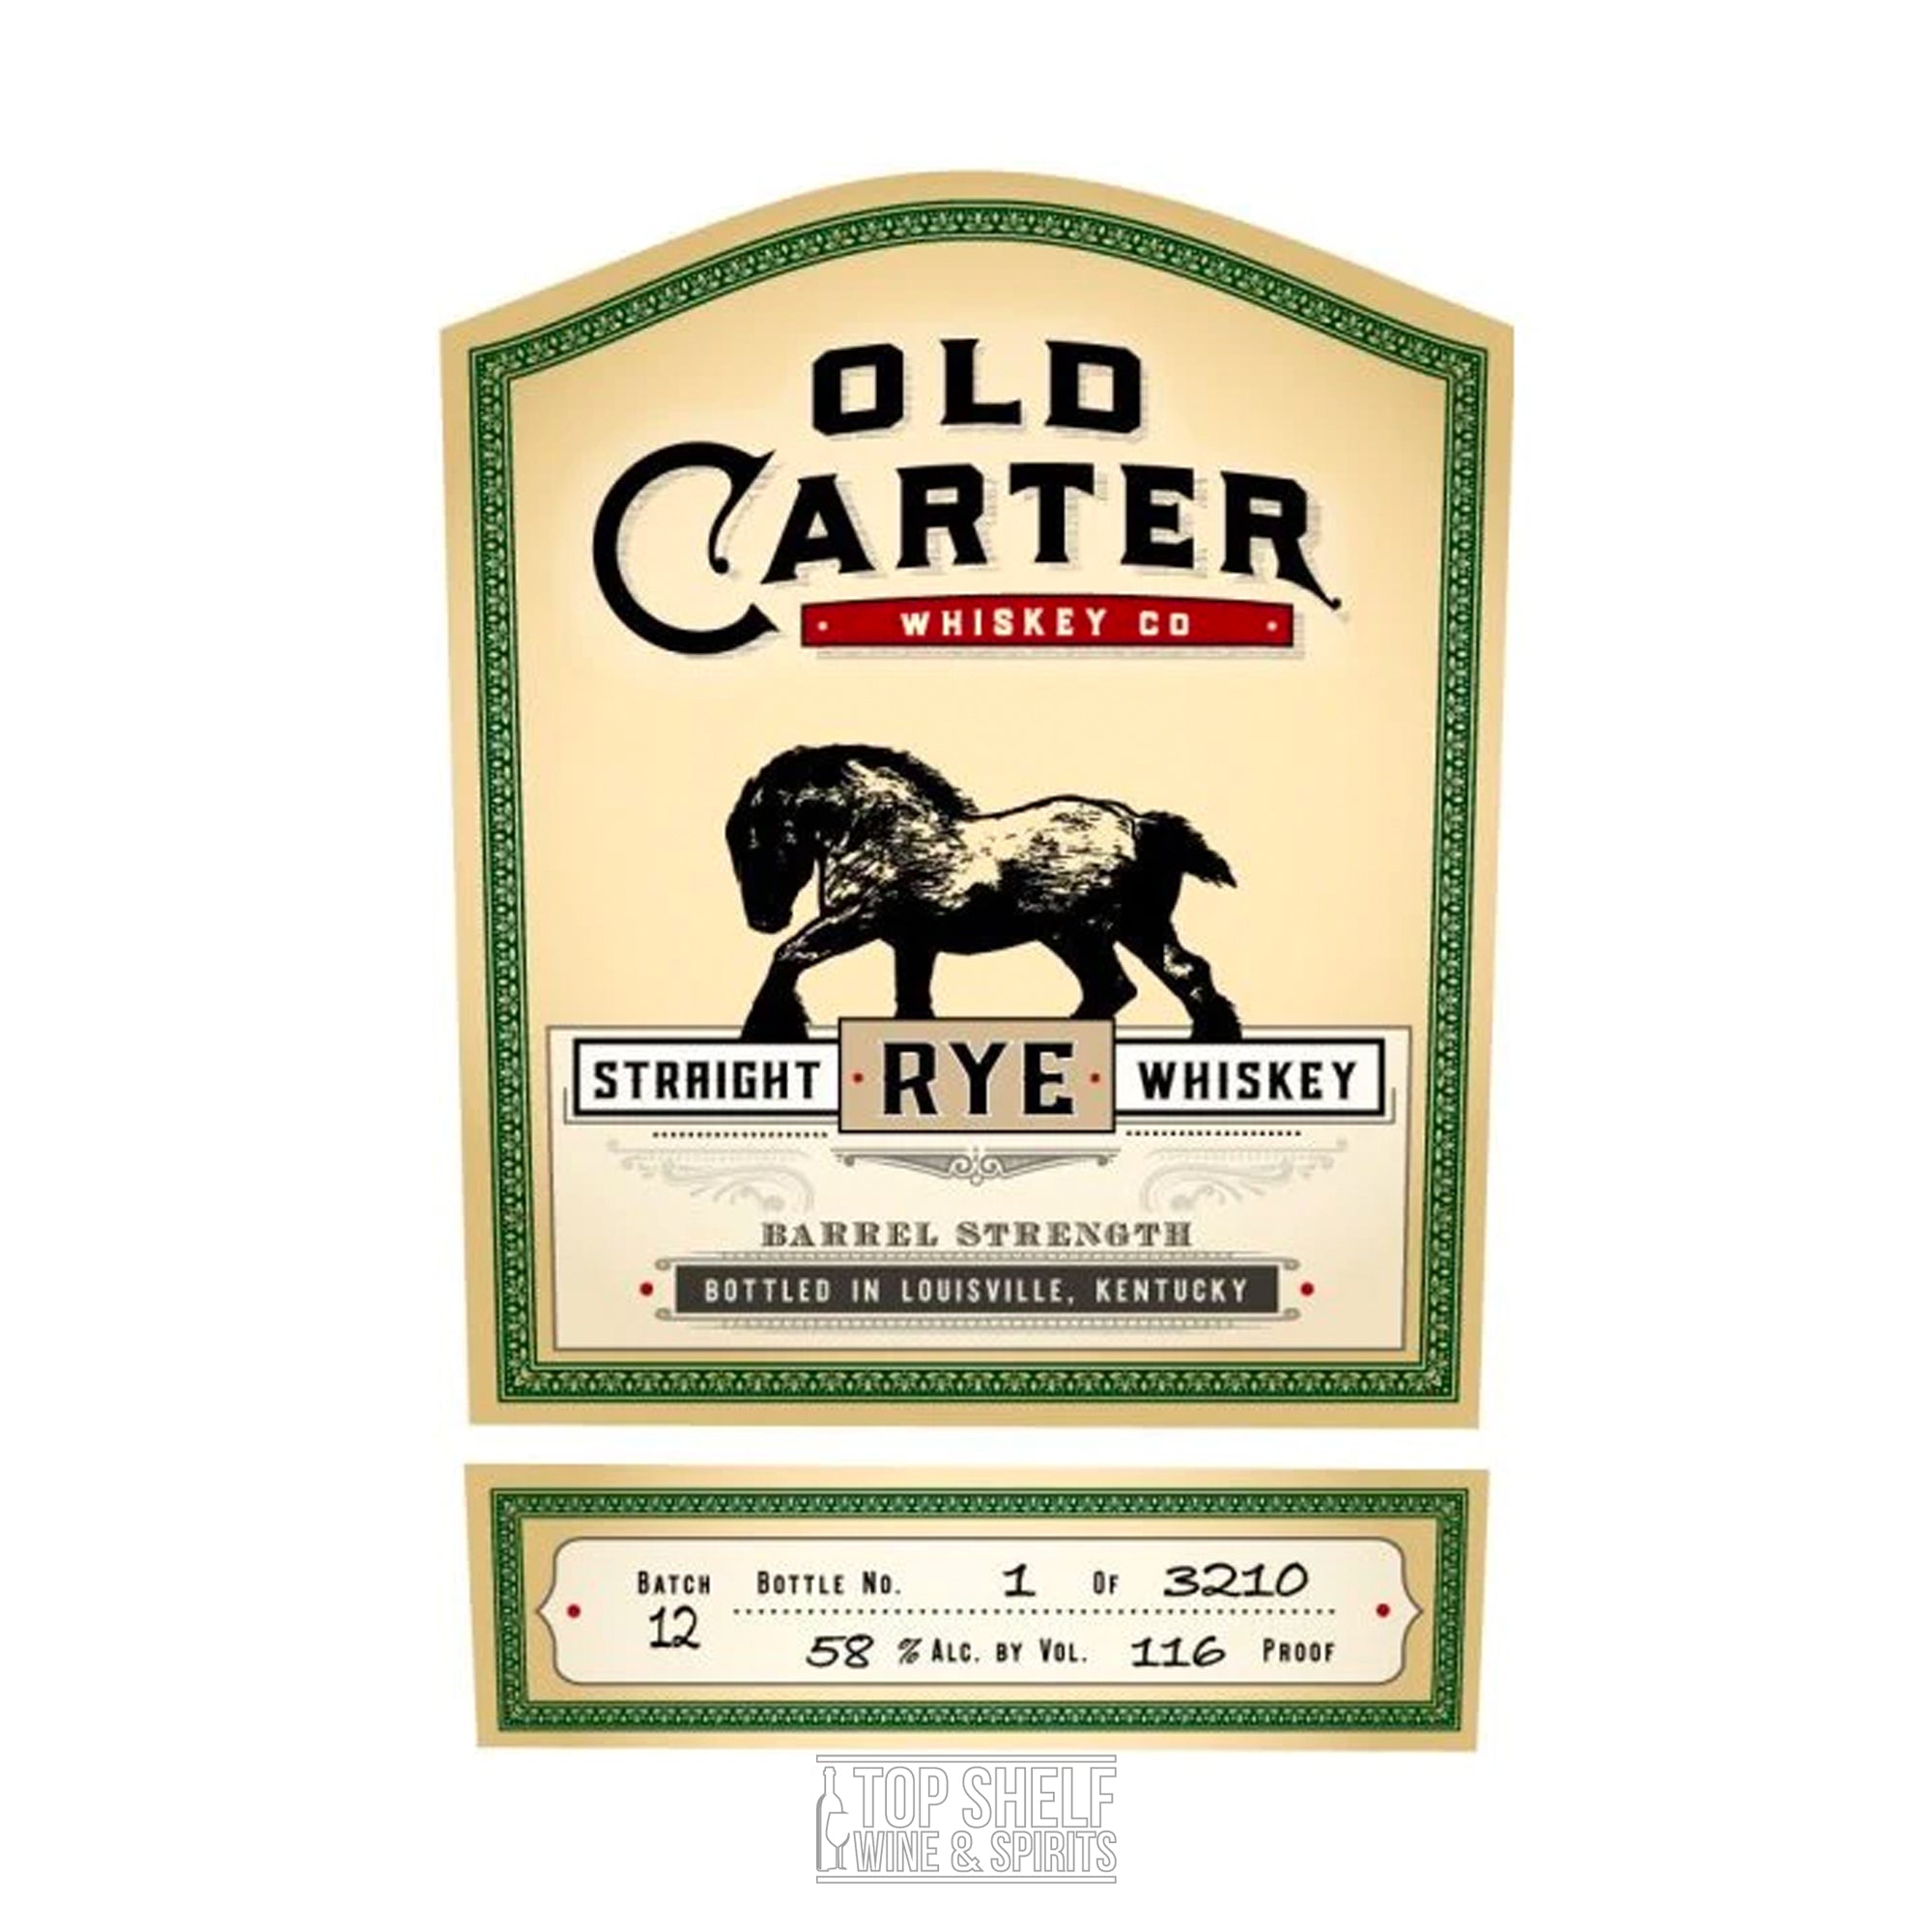 Old Carter Straight Rye Whiskey Batch 12